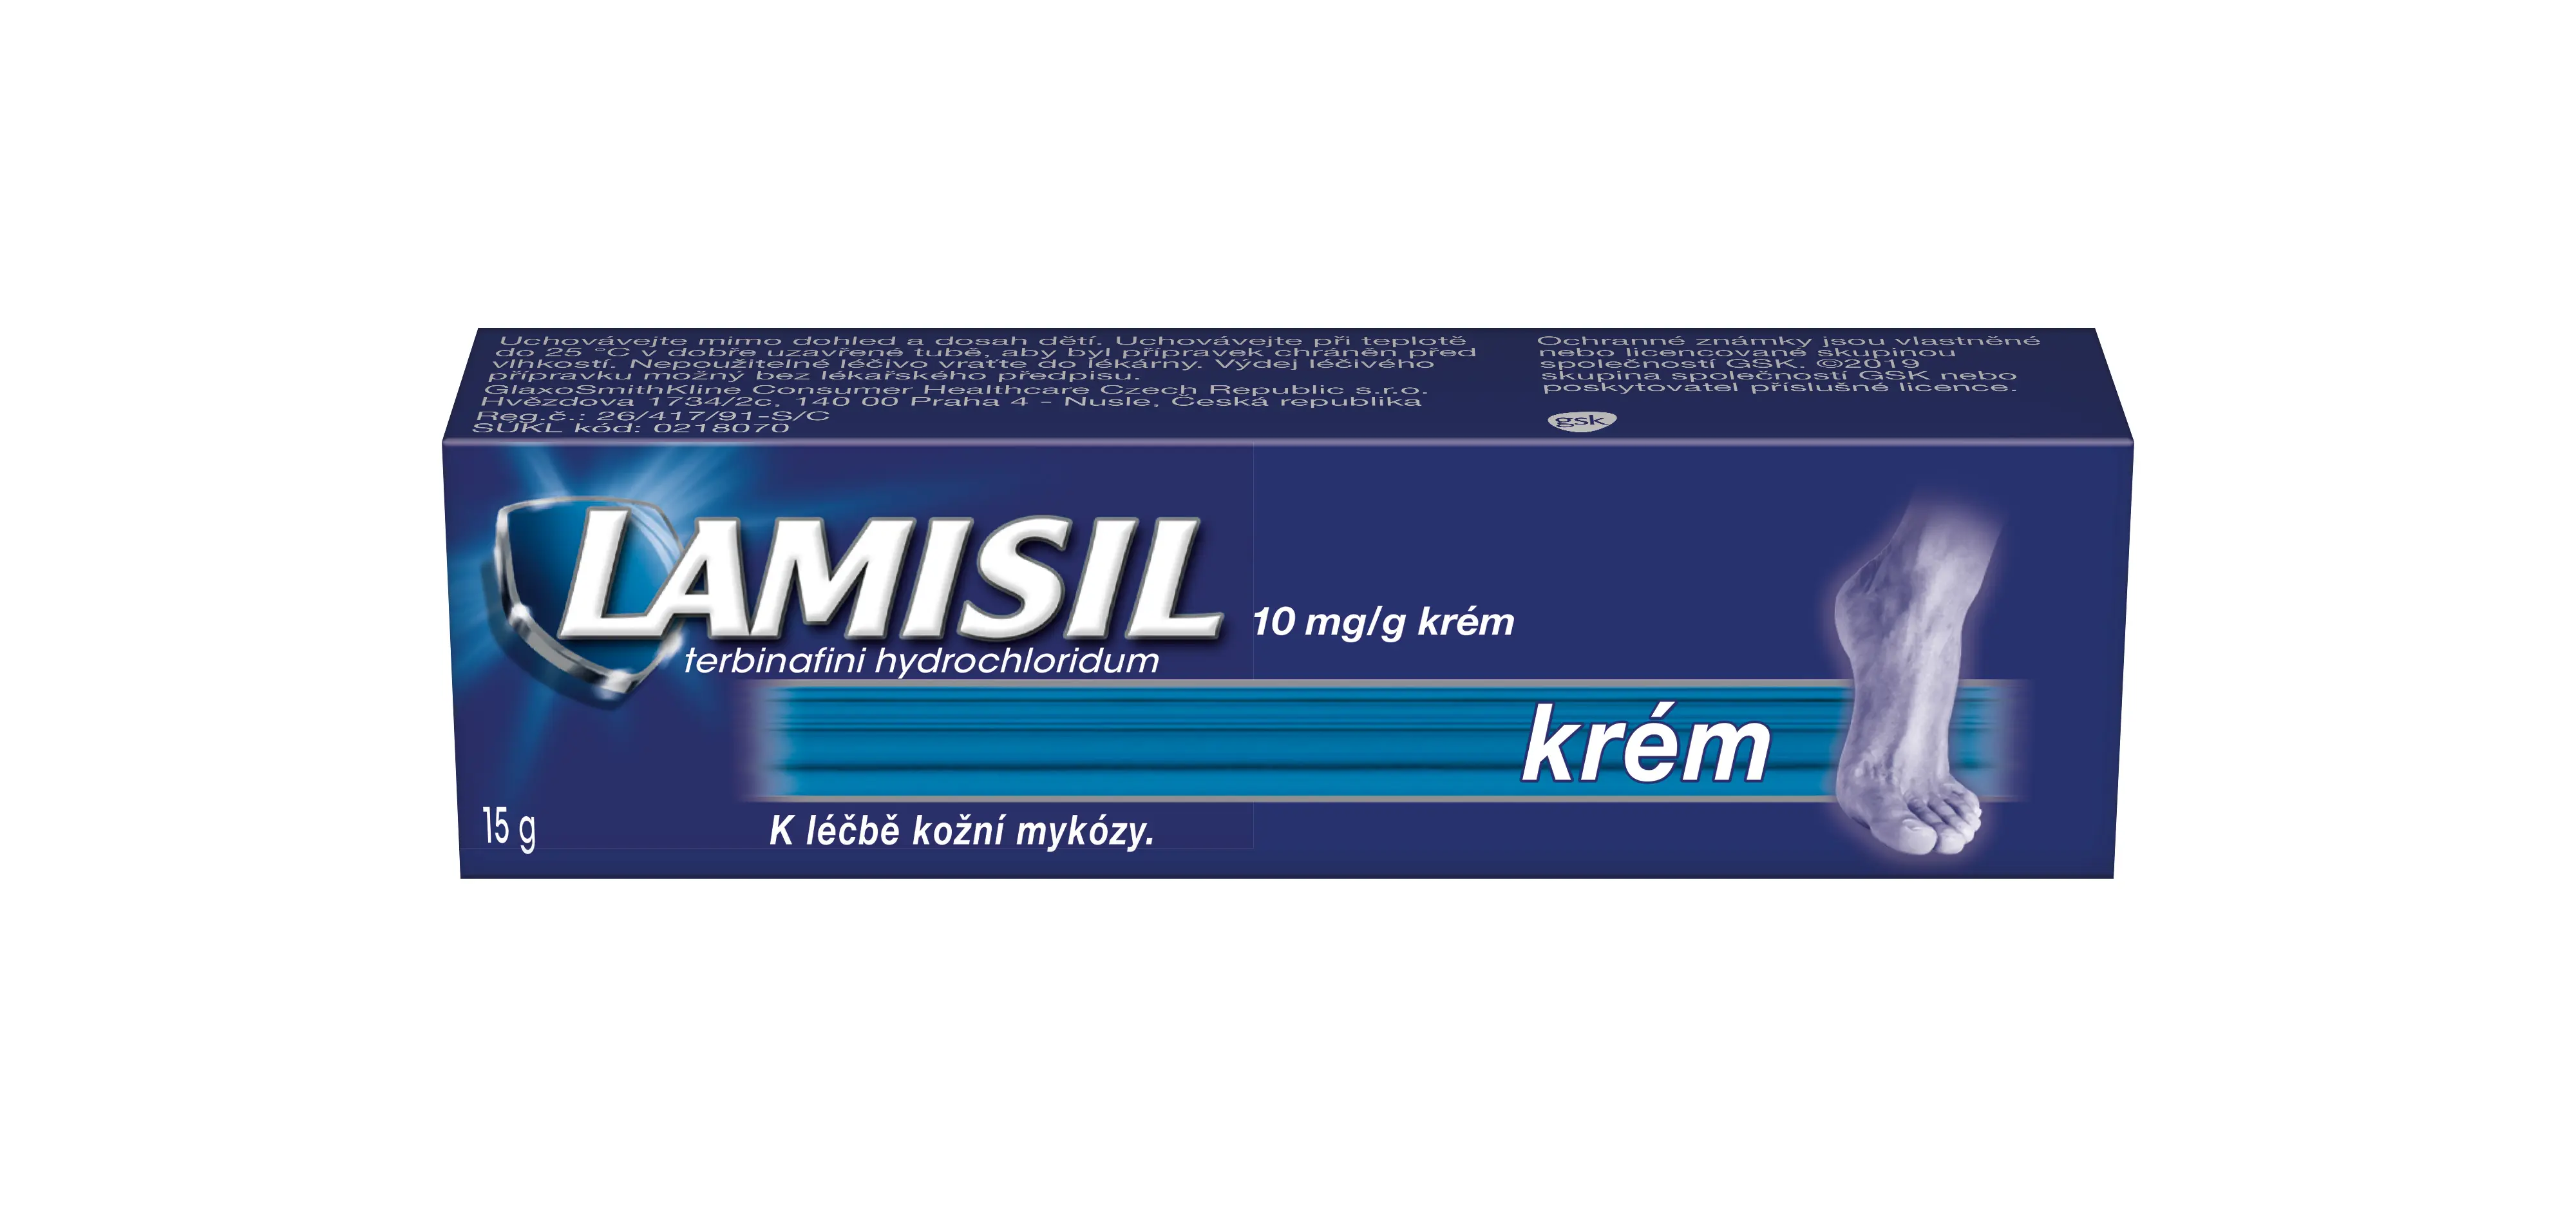 Lamisil drm.crm. 1 x 15 g I